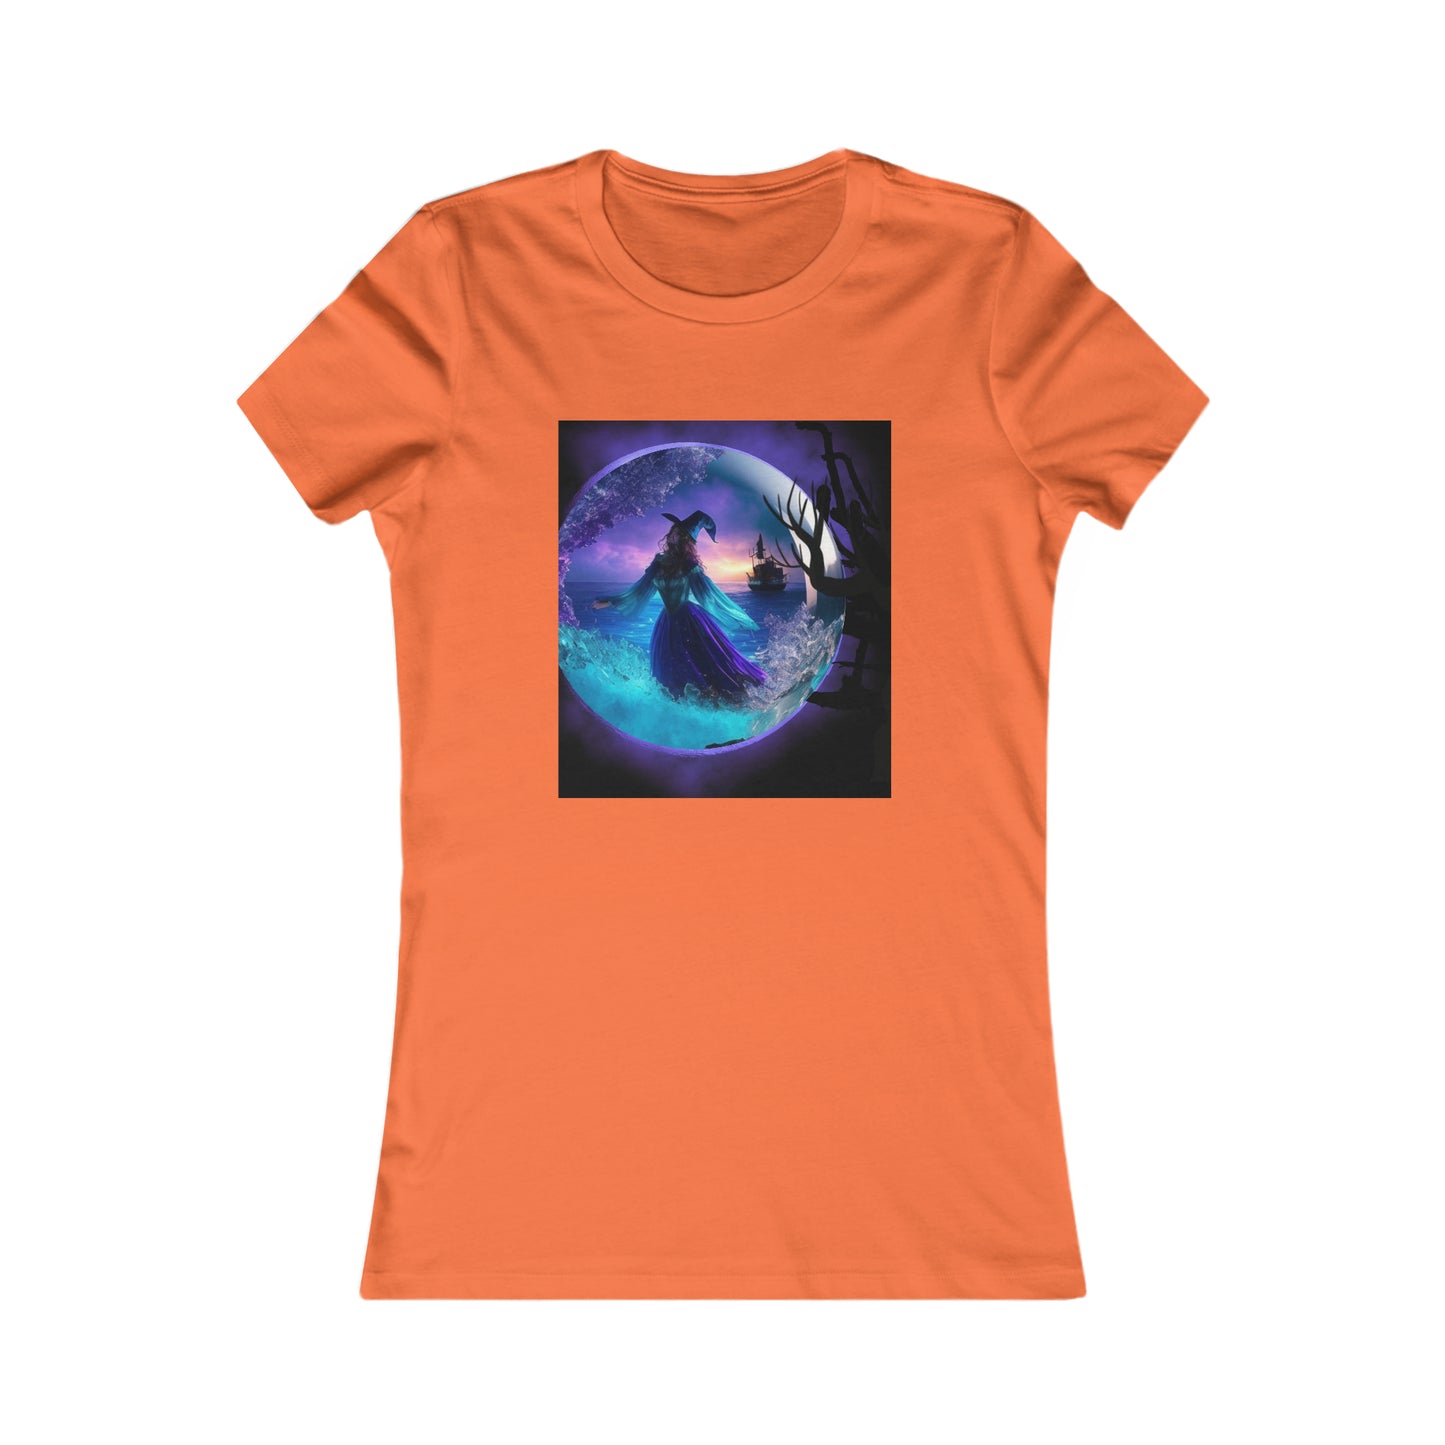 Camiseta favorita de las mujeres - Halloween Witch AI - 02